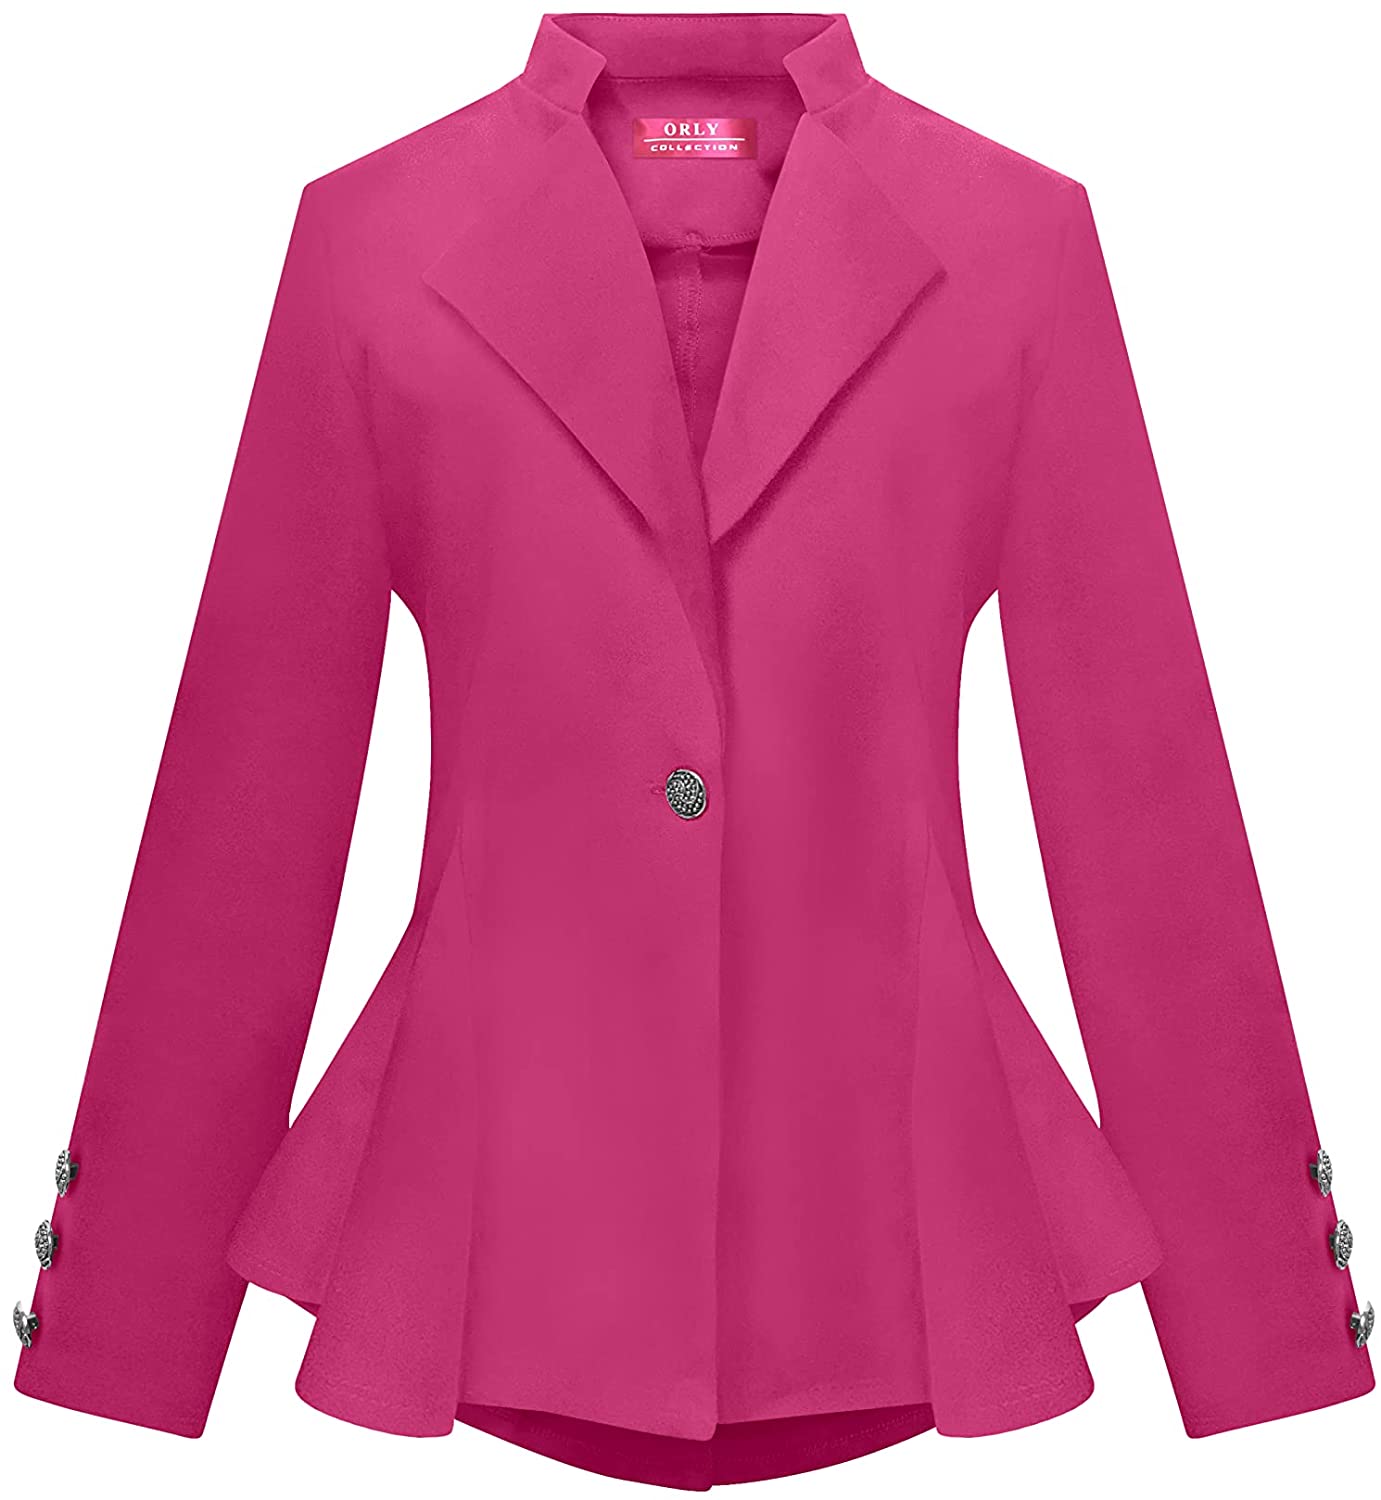 fvwitlyh Plus Size Blazer Women's 3/4 Sleeve Lightweight Casual Work Knit  Blazer Jacket